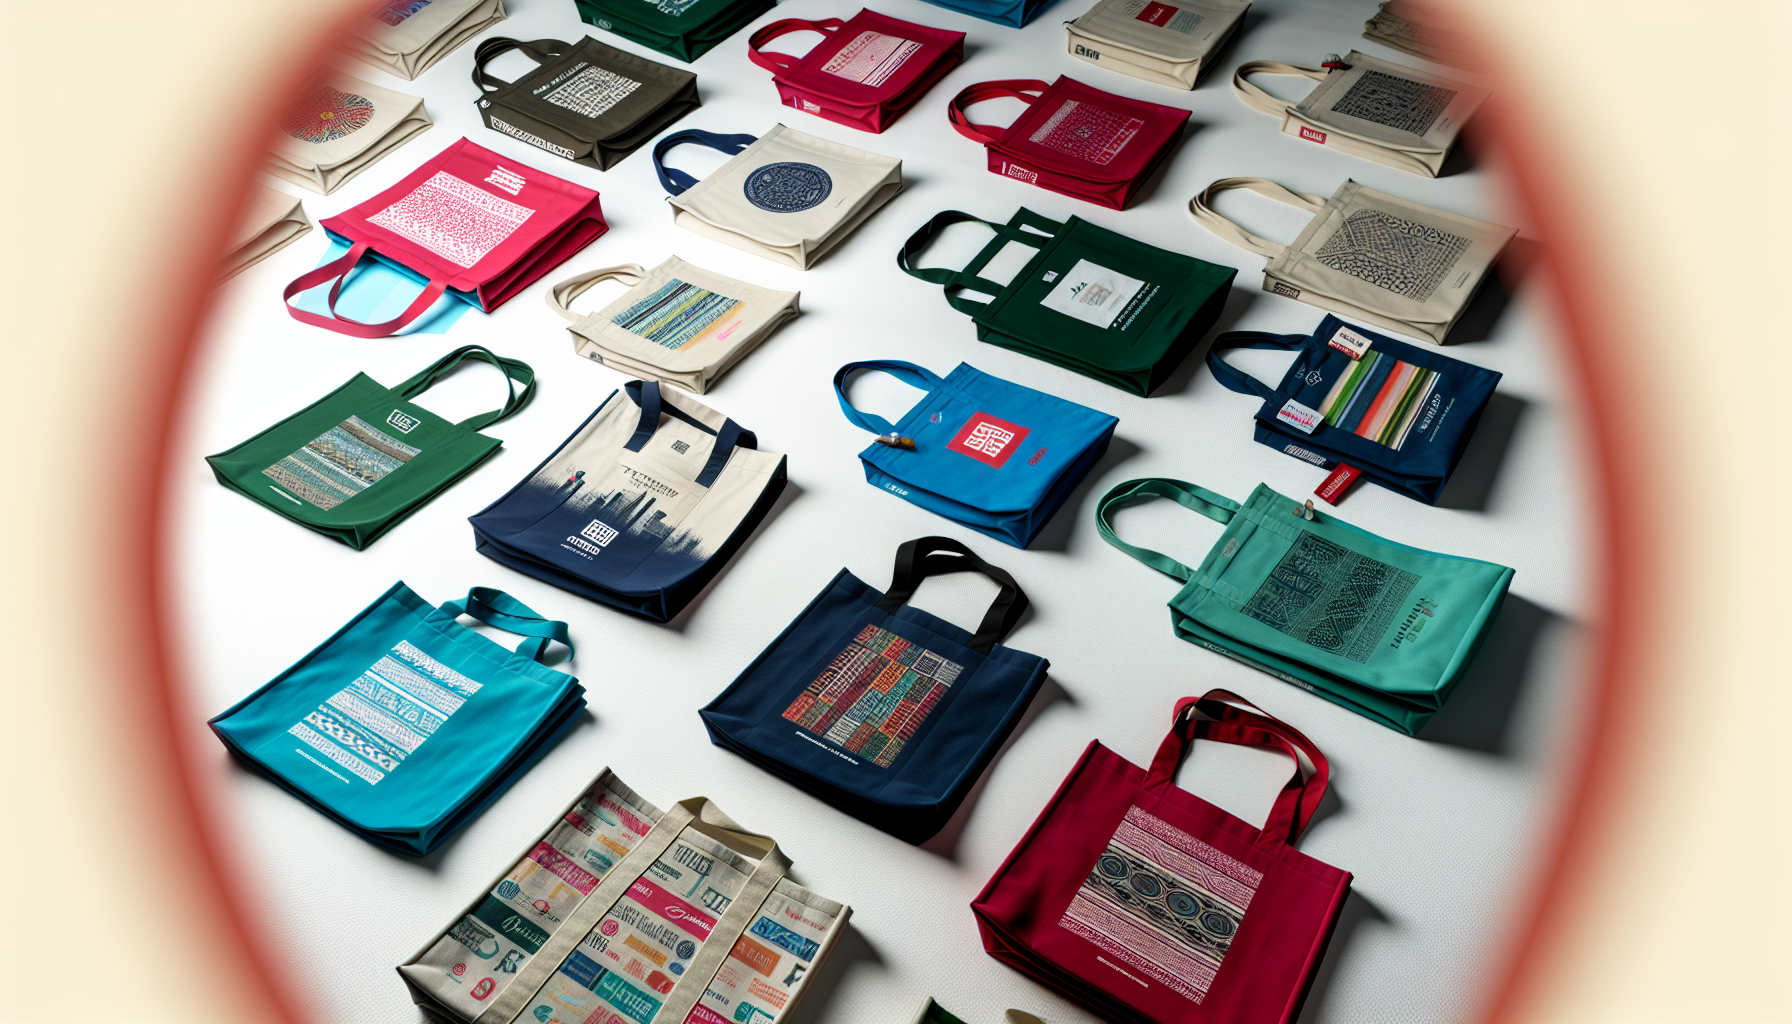 Custom tote bags displayed in various colors and designs